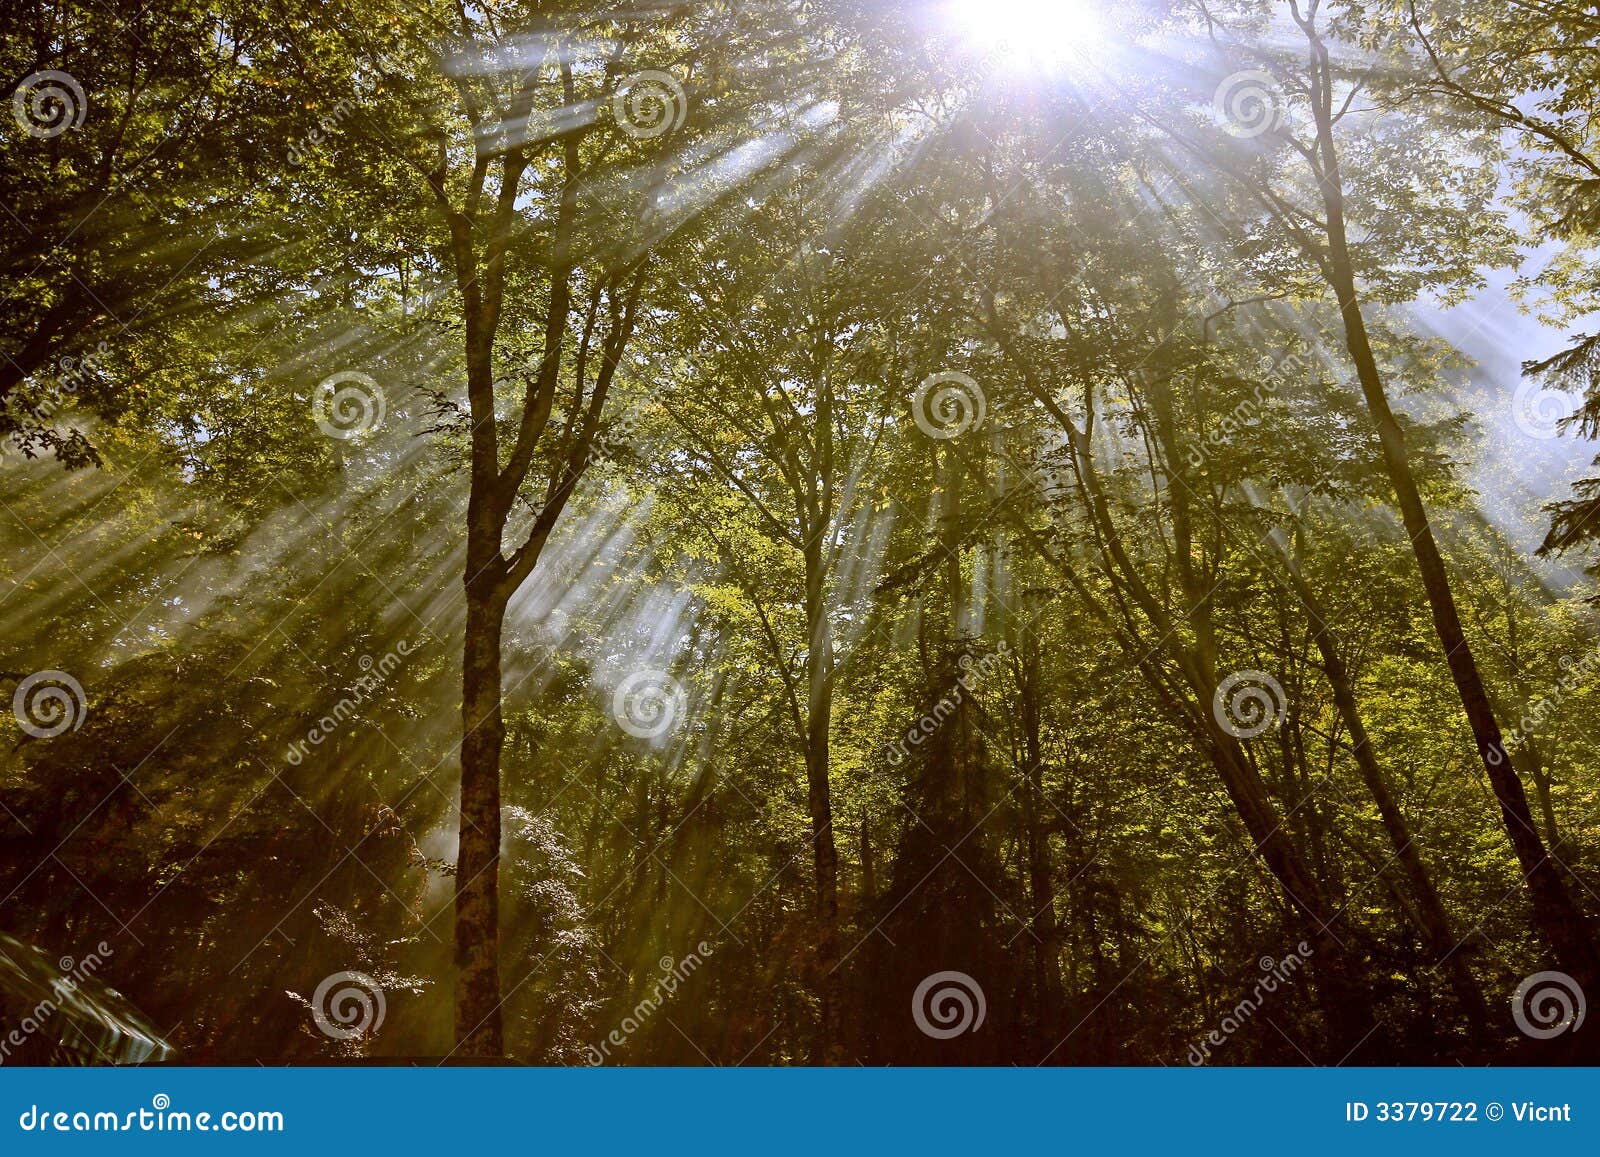 the forest sunbeam